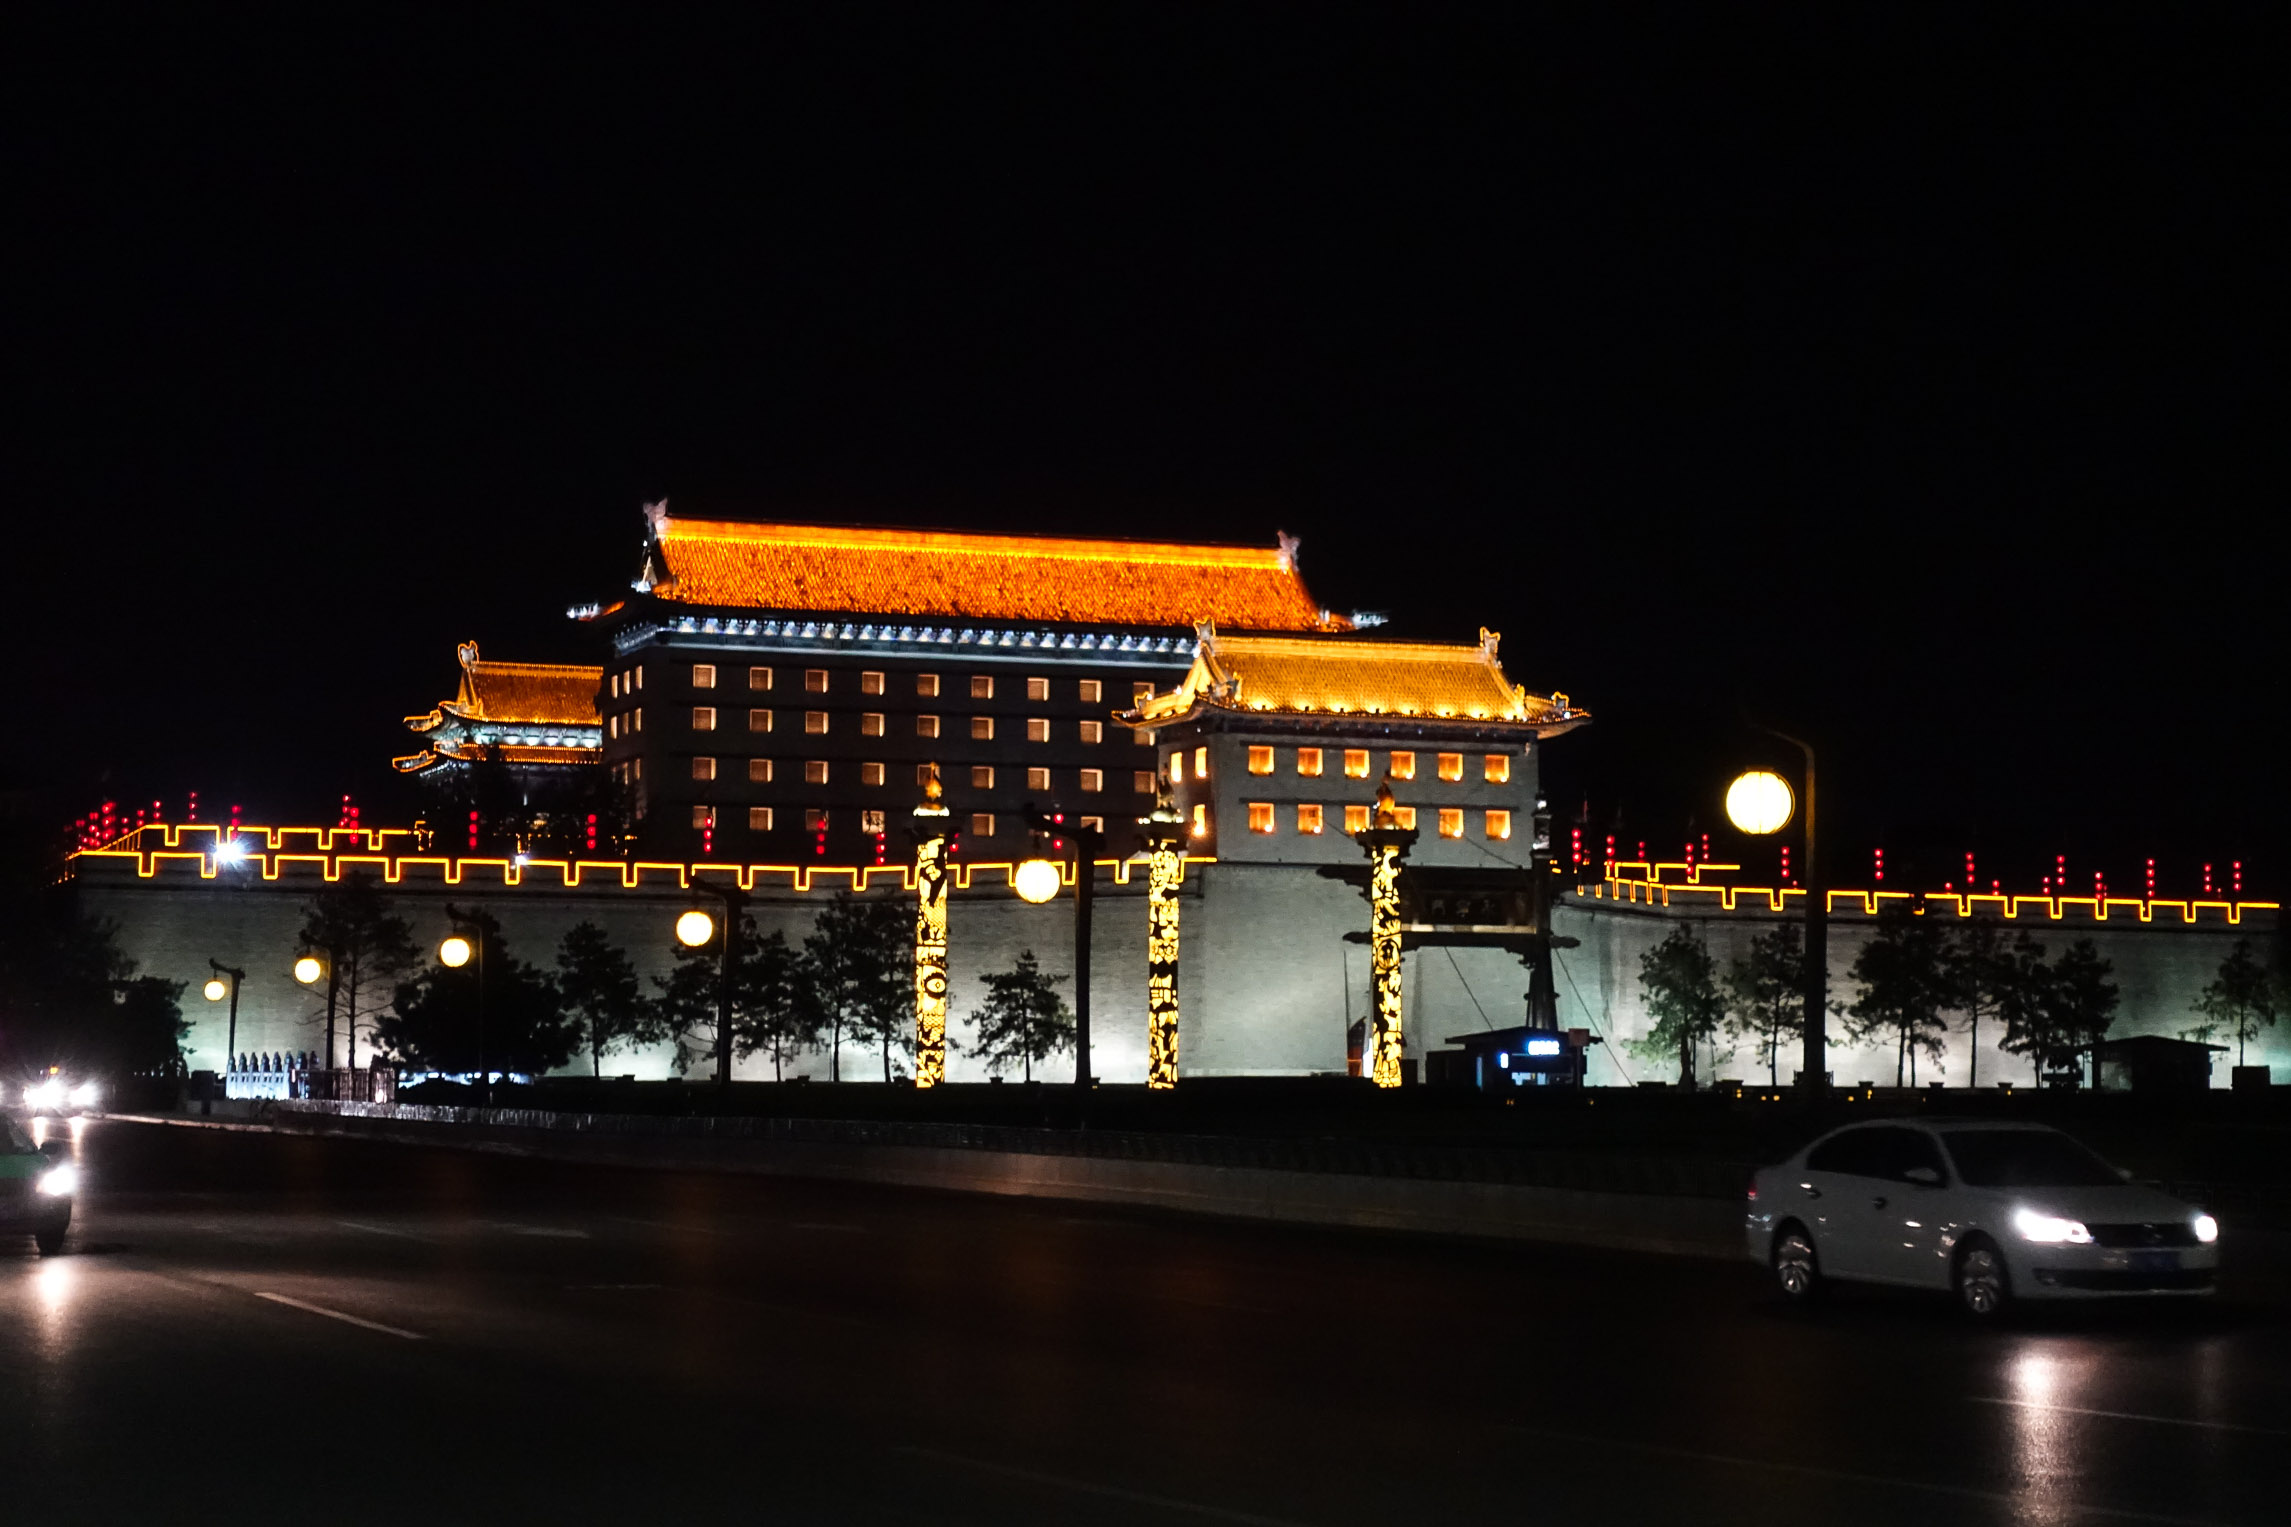 The light up walls of Xi'an